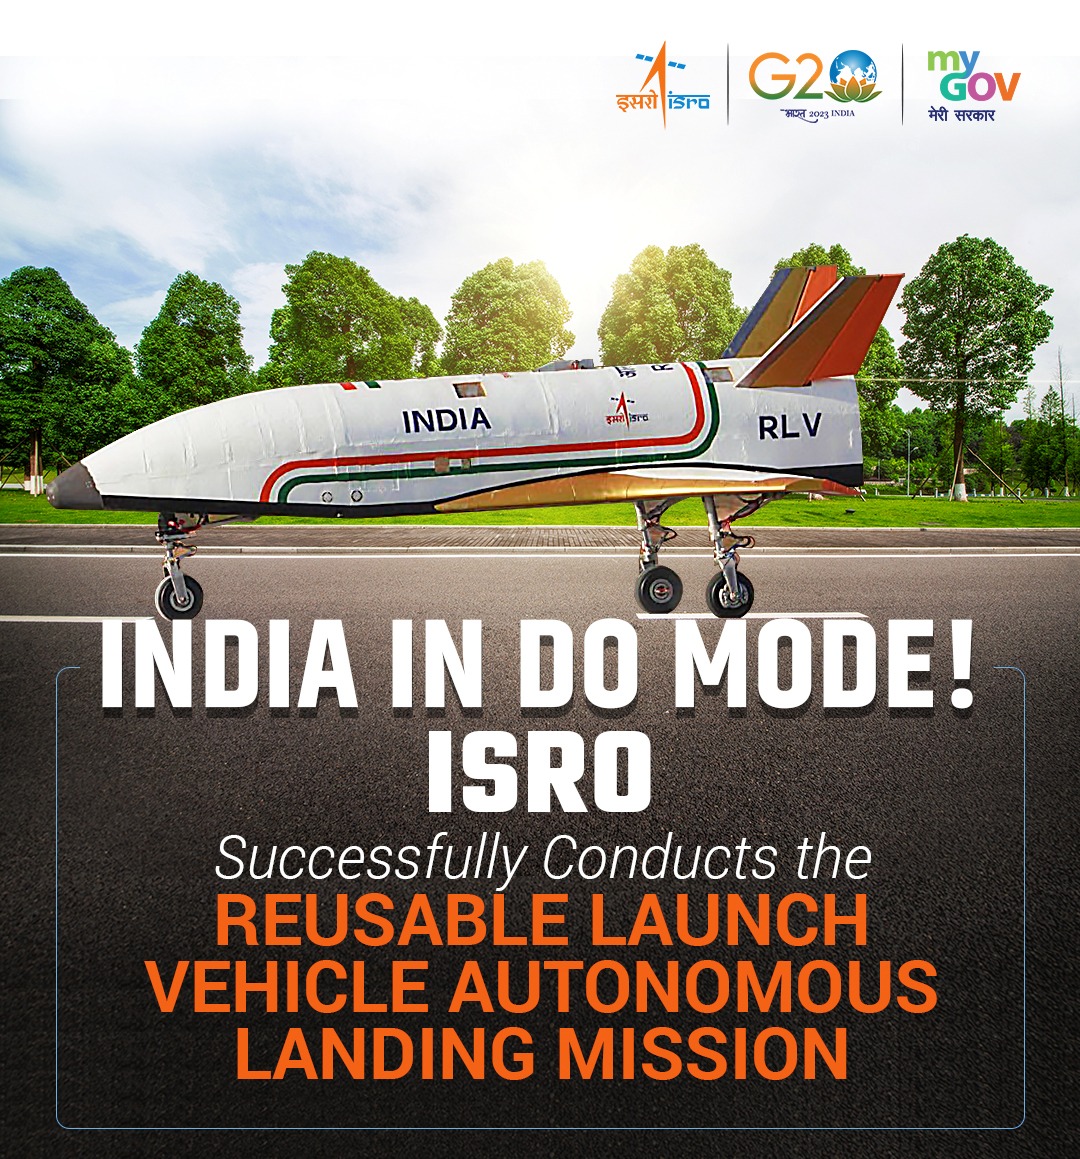 ISRO reaches new milestone, successfully lands Pushpak reusable launch vehicle